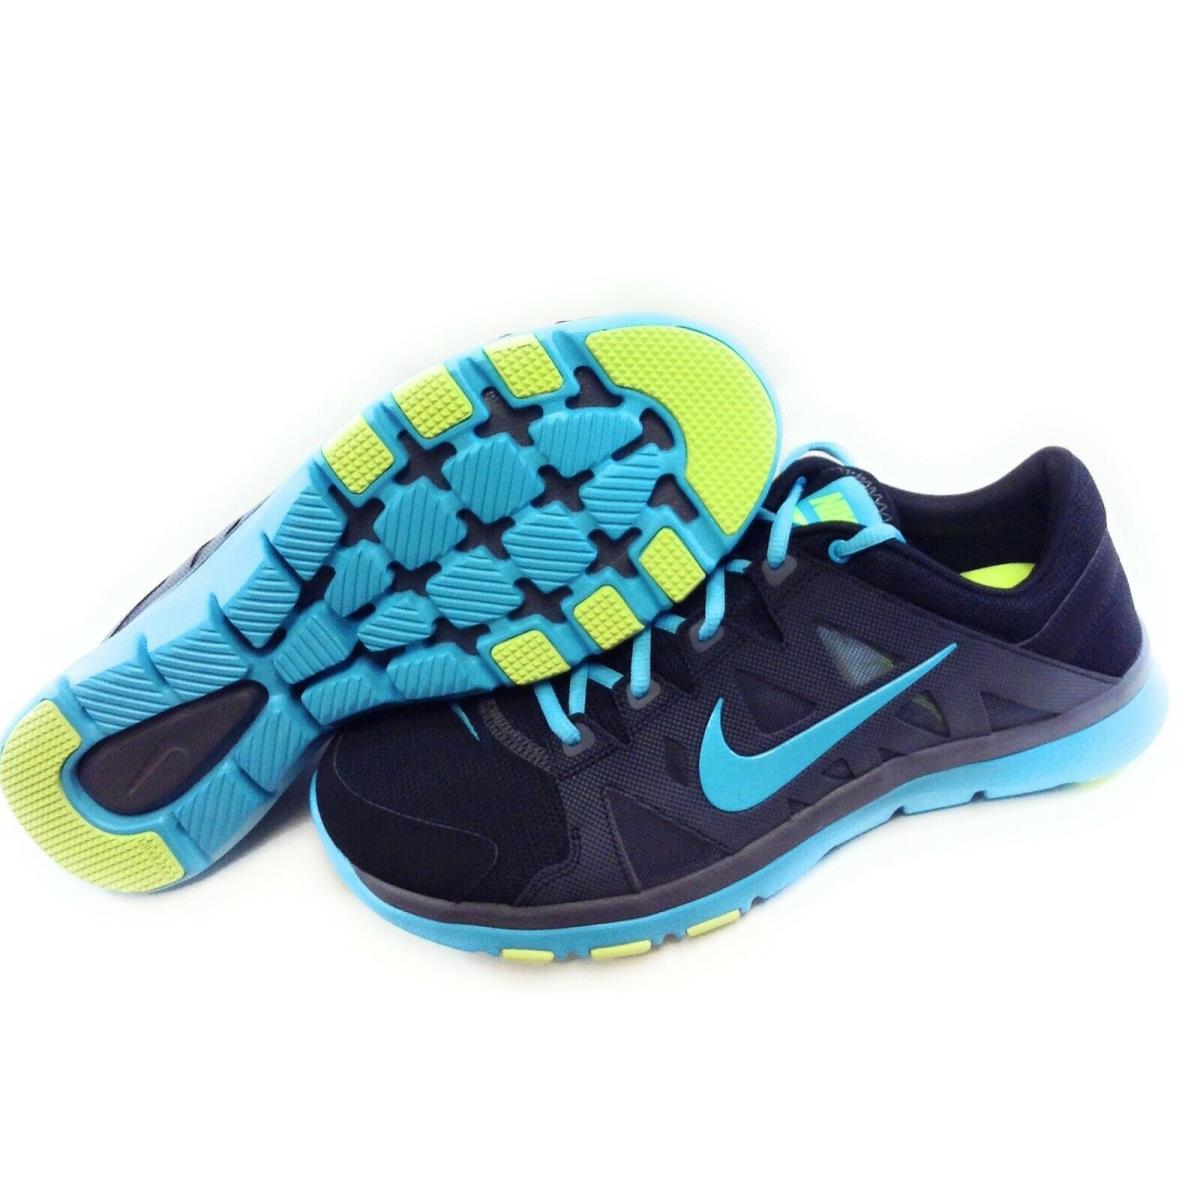 Womens Nike Flex Supreme Trainer 2 Black Gamma Blue 2014 DS Sneakers Shoes